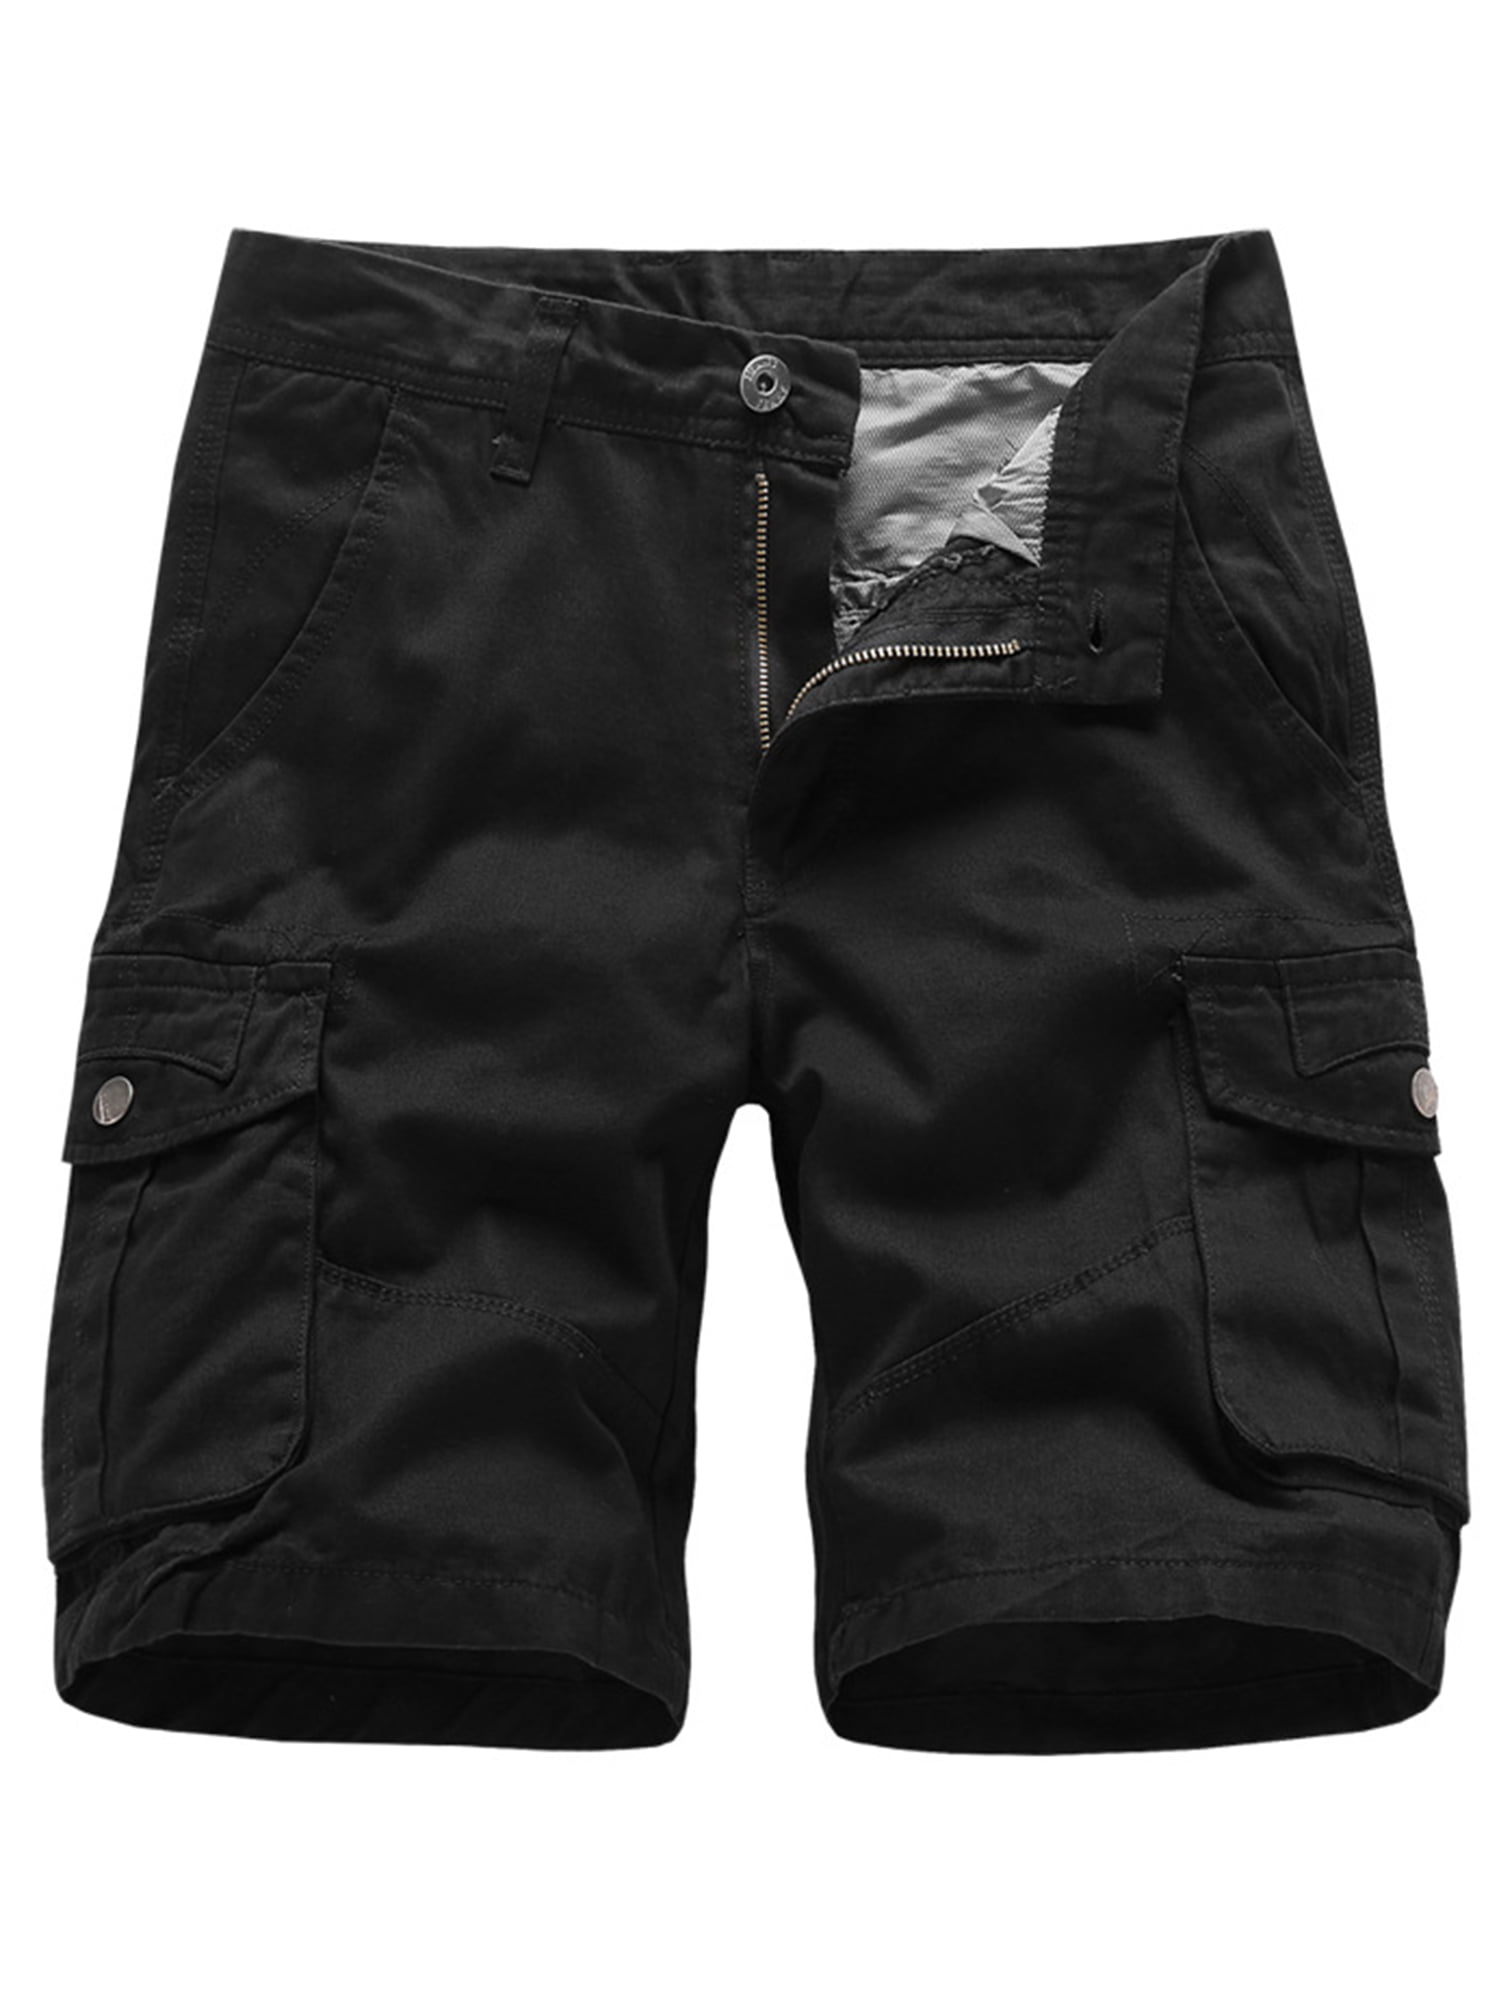 UKAP Mens Plus Size Cargo Shorts Combat Work Summer Pants Casual Big ...